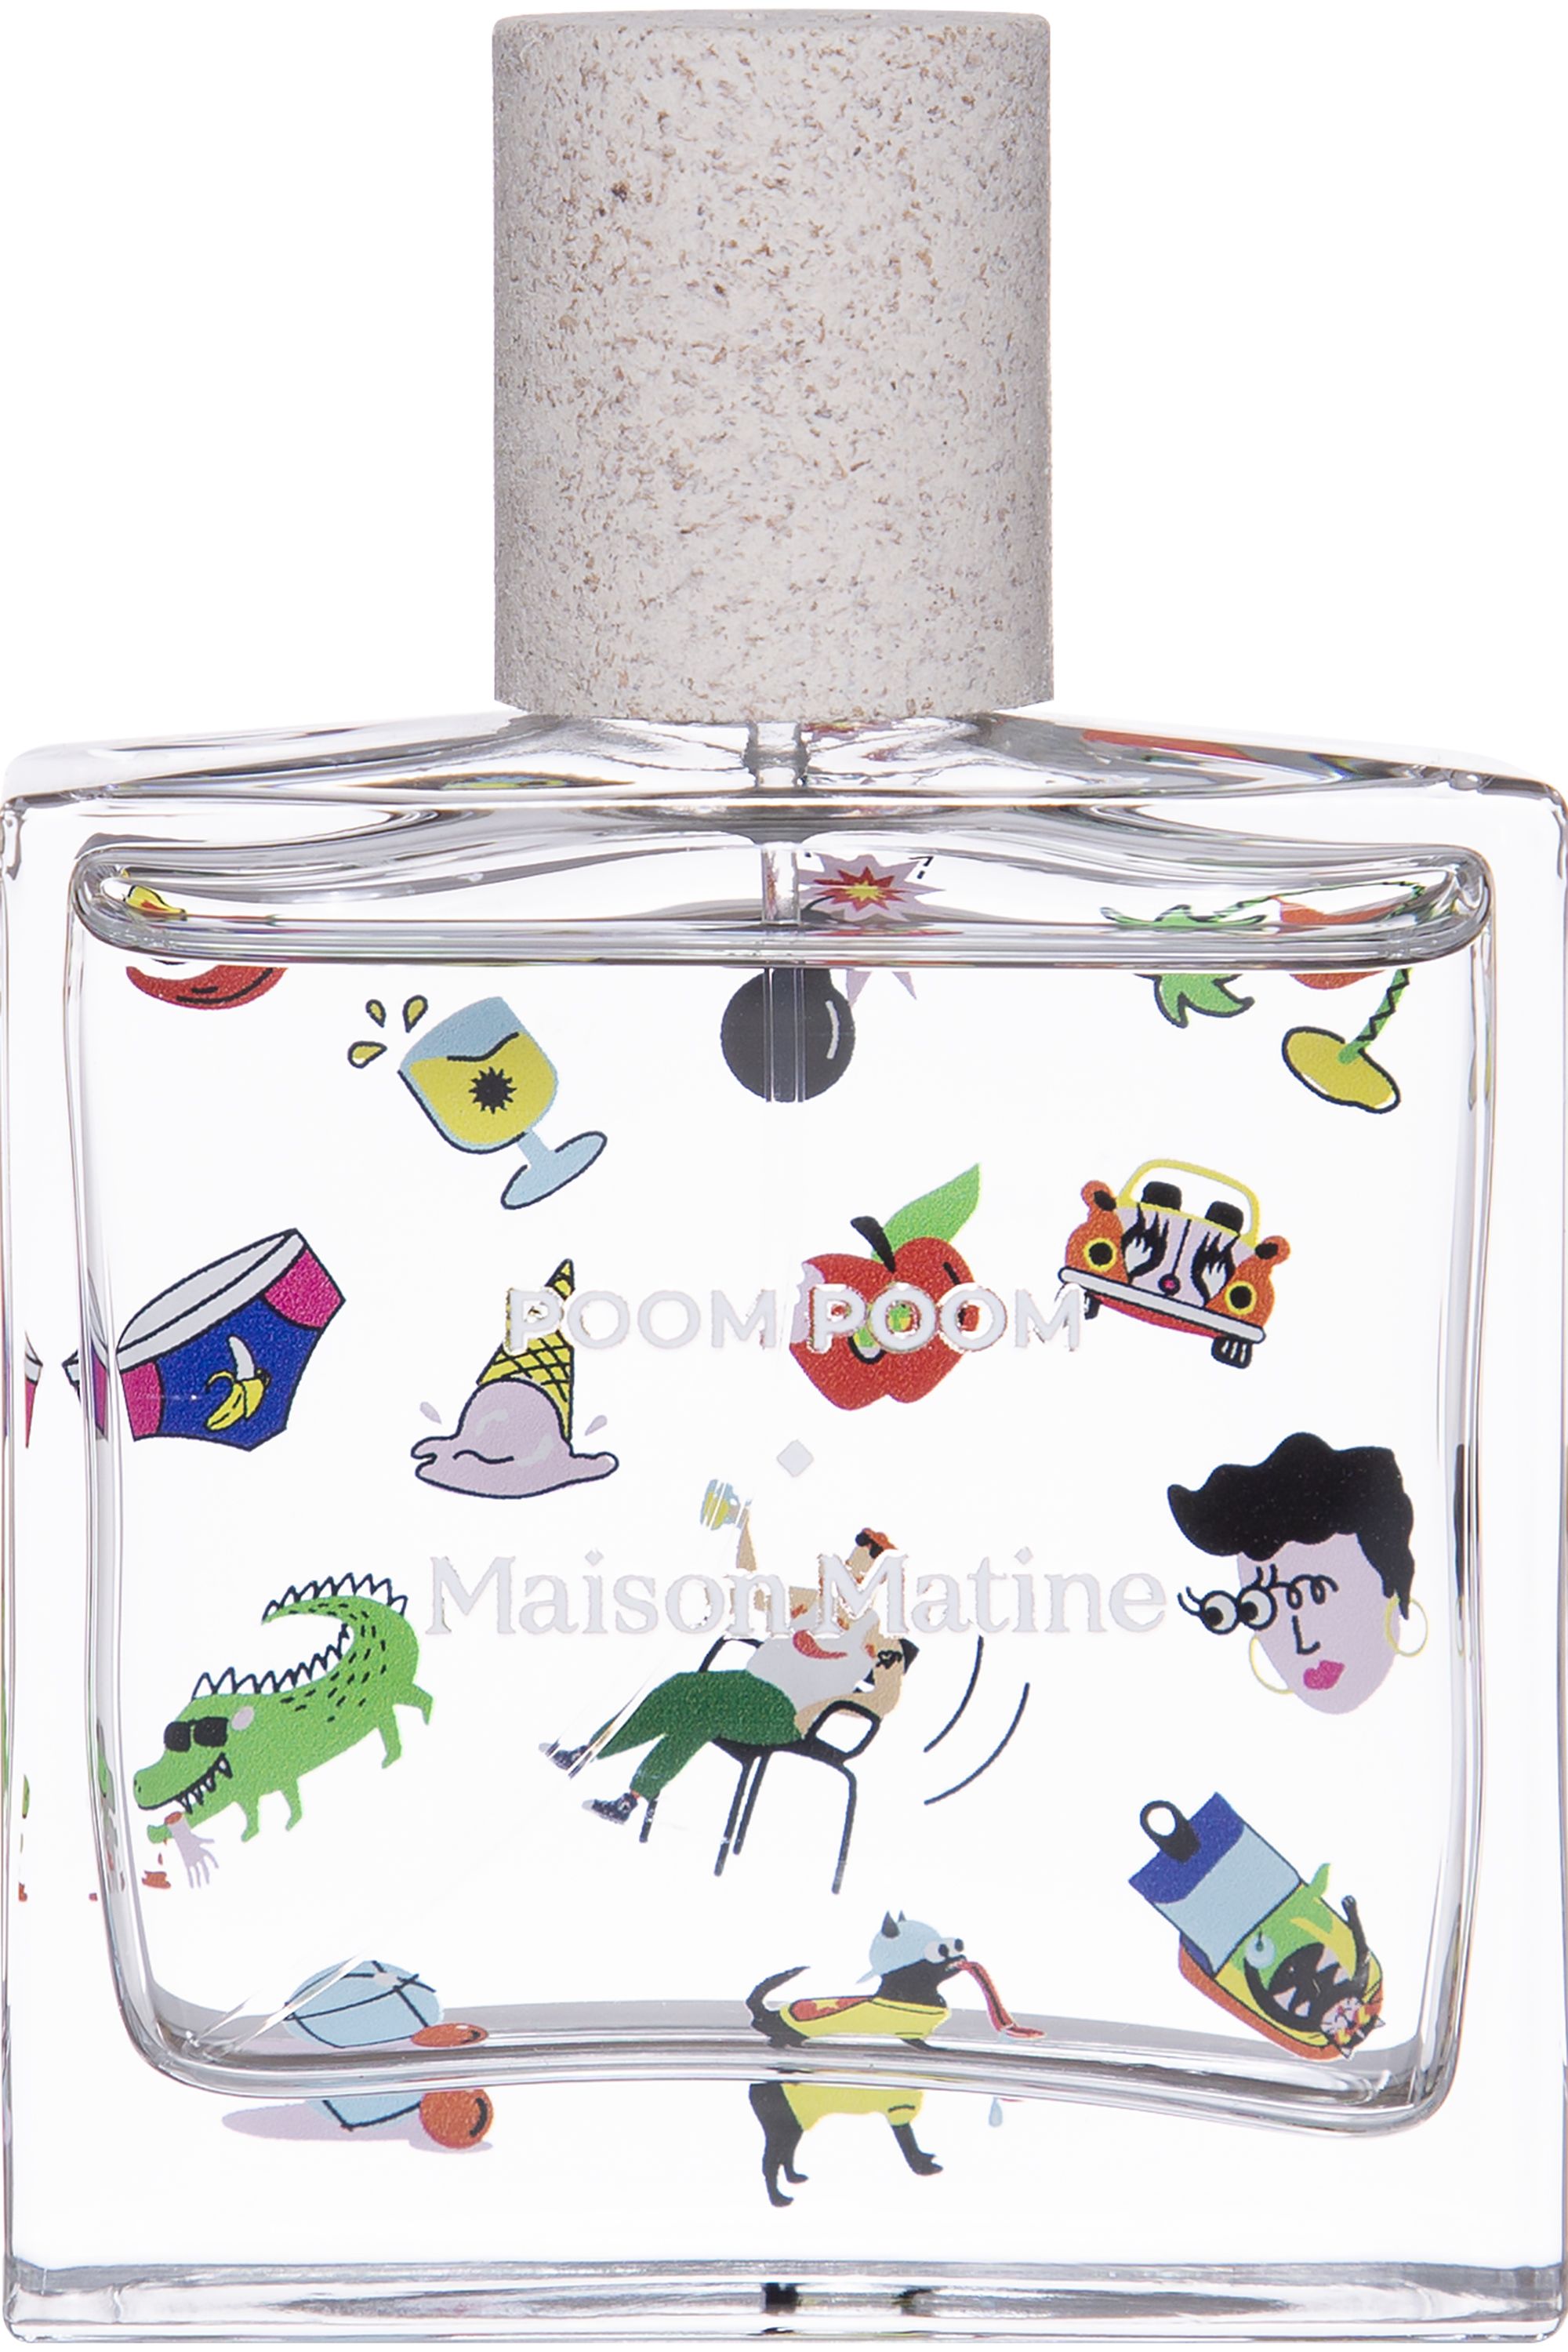 Maison Matine Parfum INTO THE WILD - 4MURS